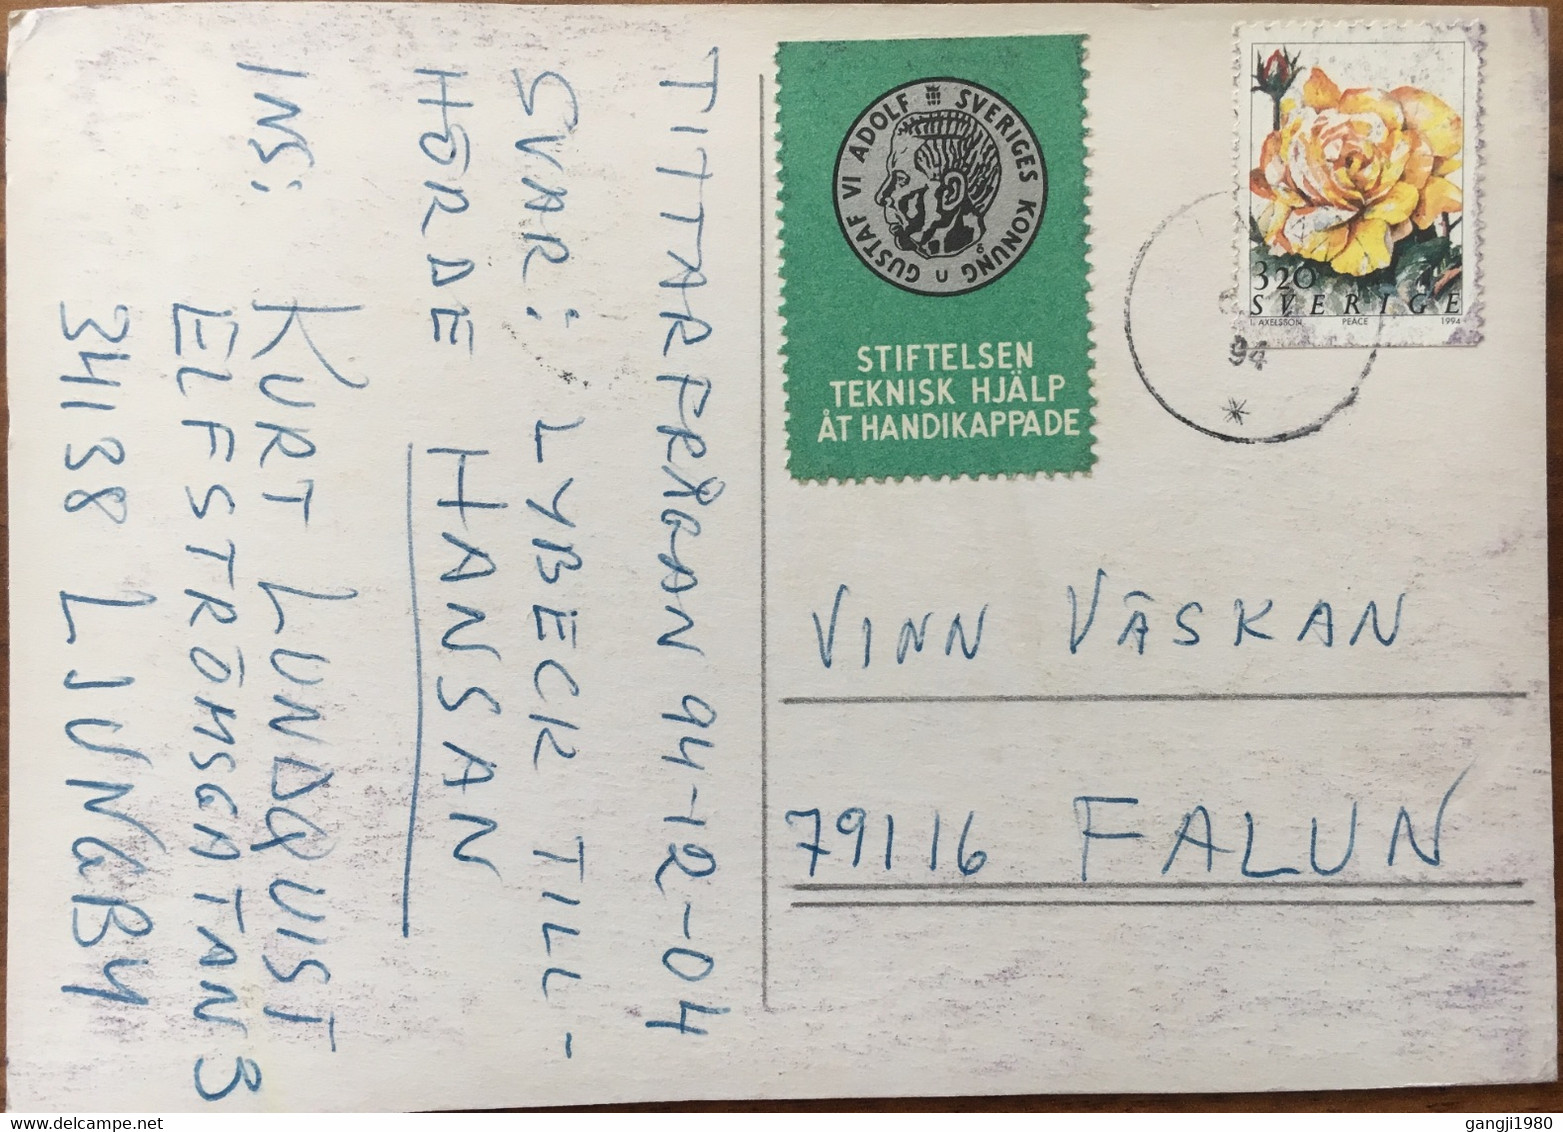 SWEDEN 1994, VIGNETTE KING GUSTAF VIADOLE ,STIFTELSEN IEKNISK HIJALP AT HANDIKAPPADE CINDRELA ,RELLOW ROSE STAMP ON POST - Covers & Documents